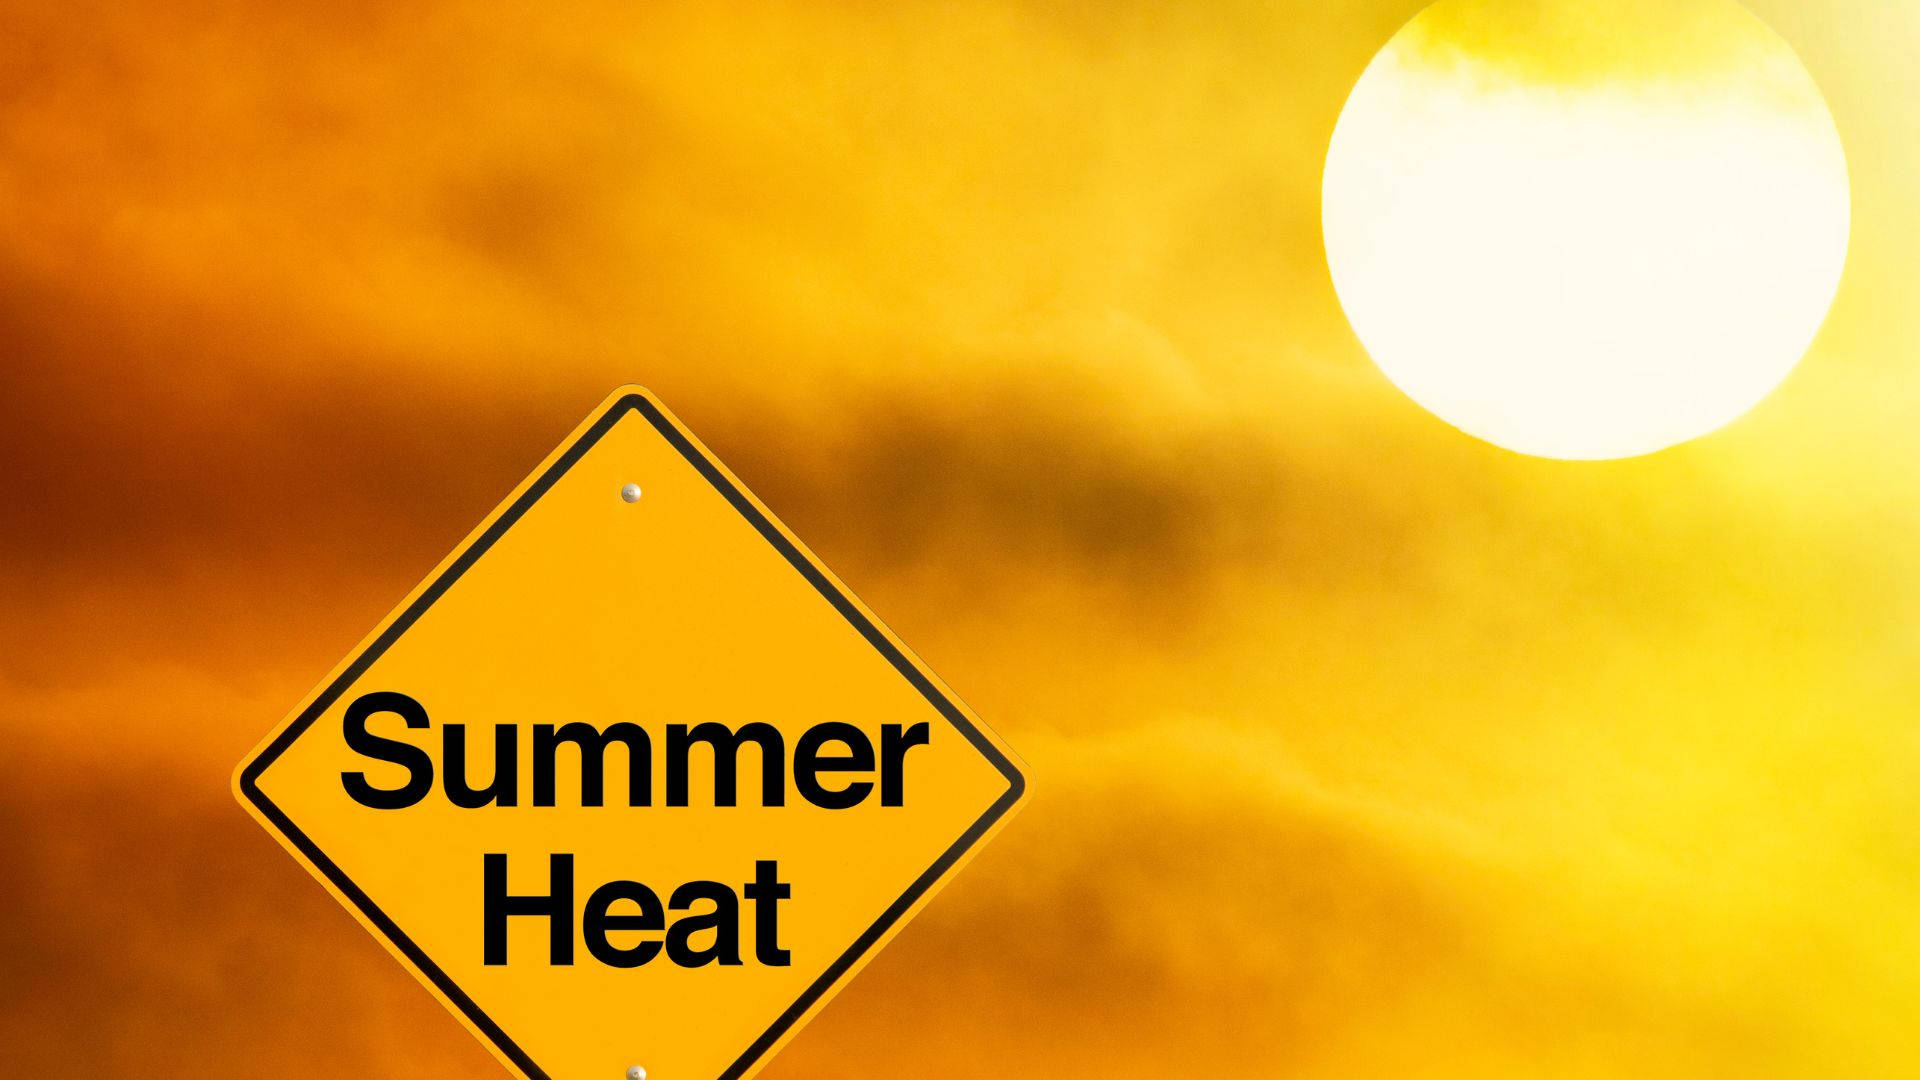 Sunlight Summer Heat Signage Picture